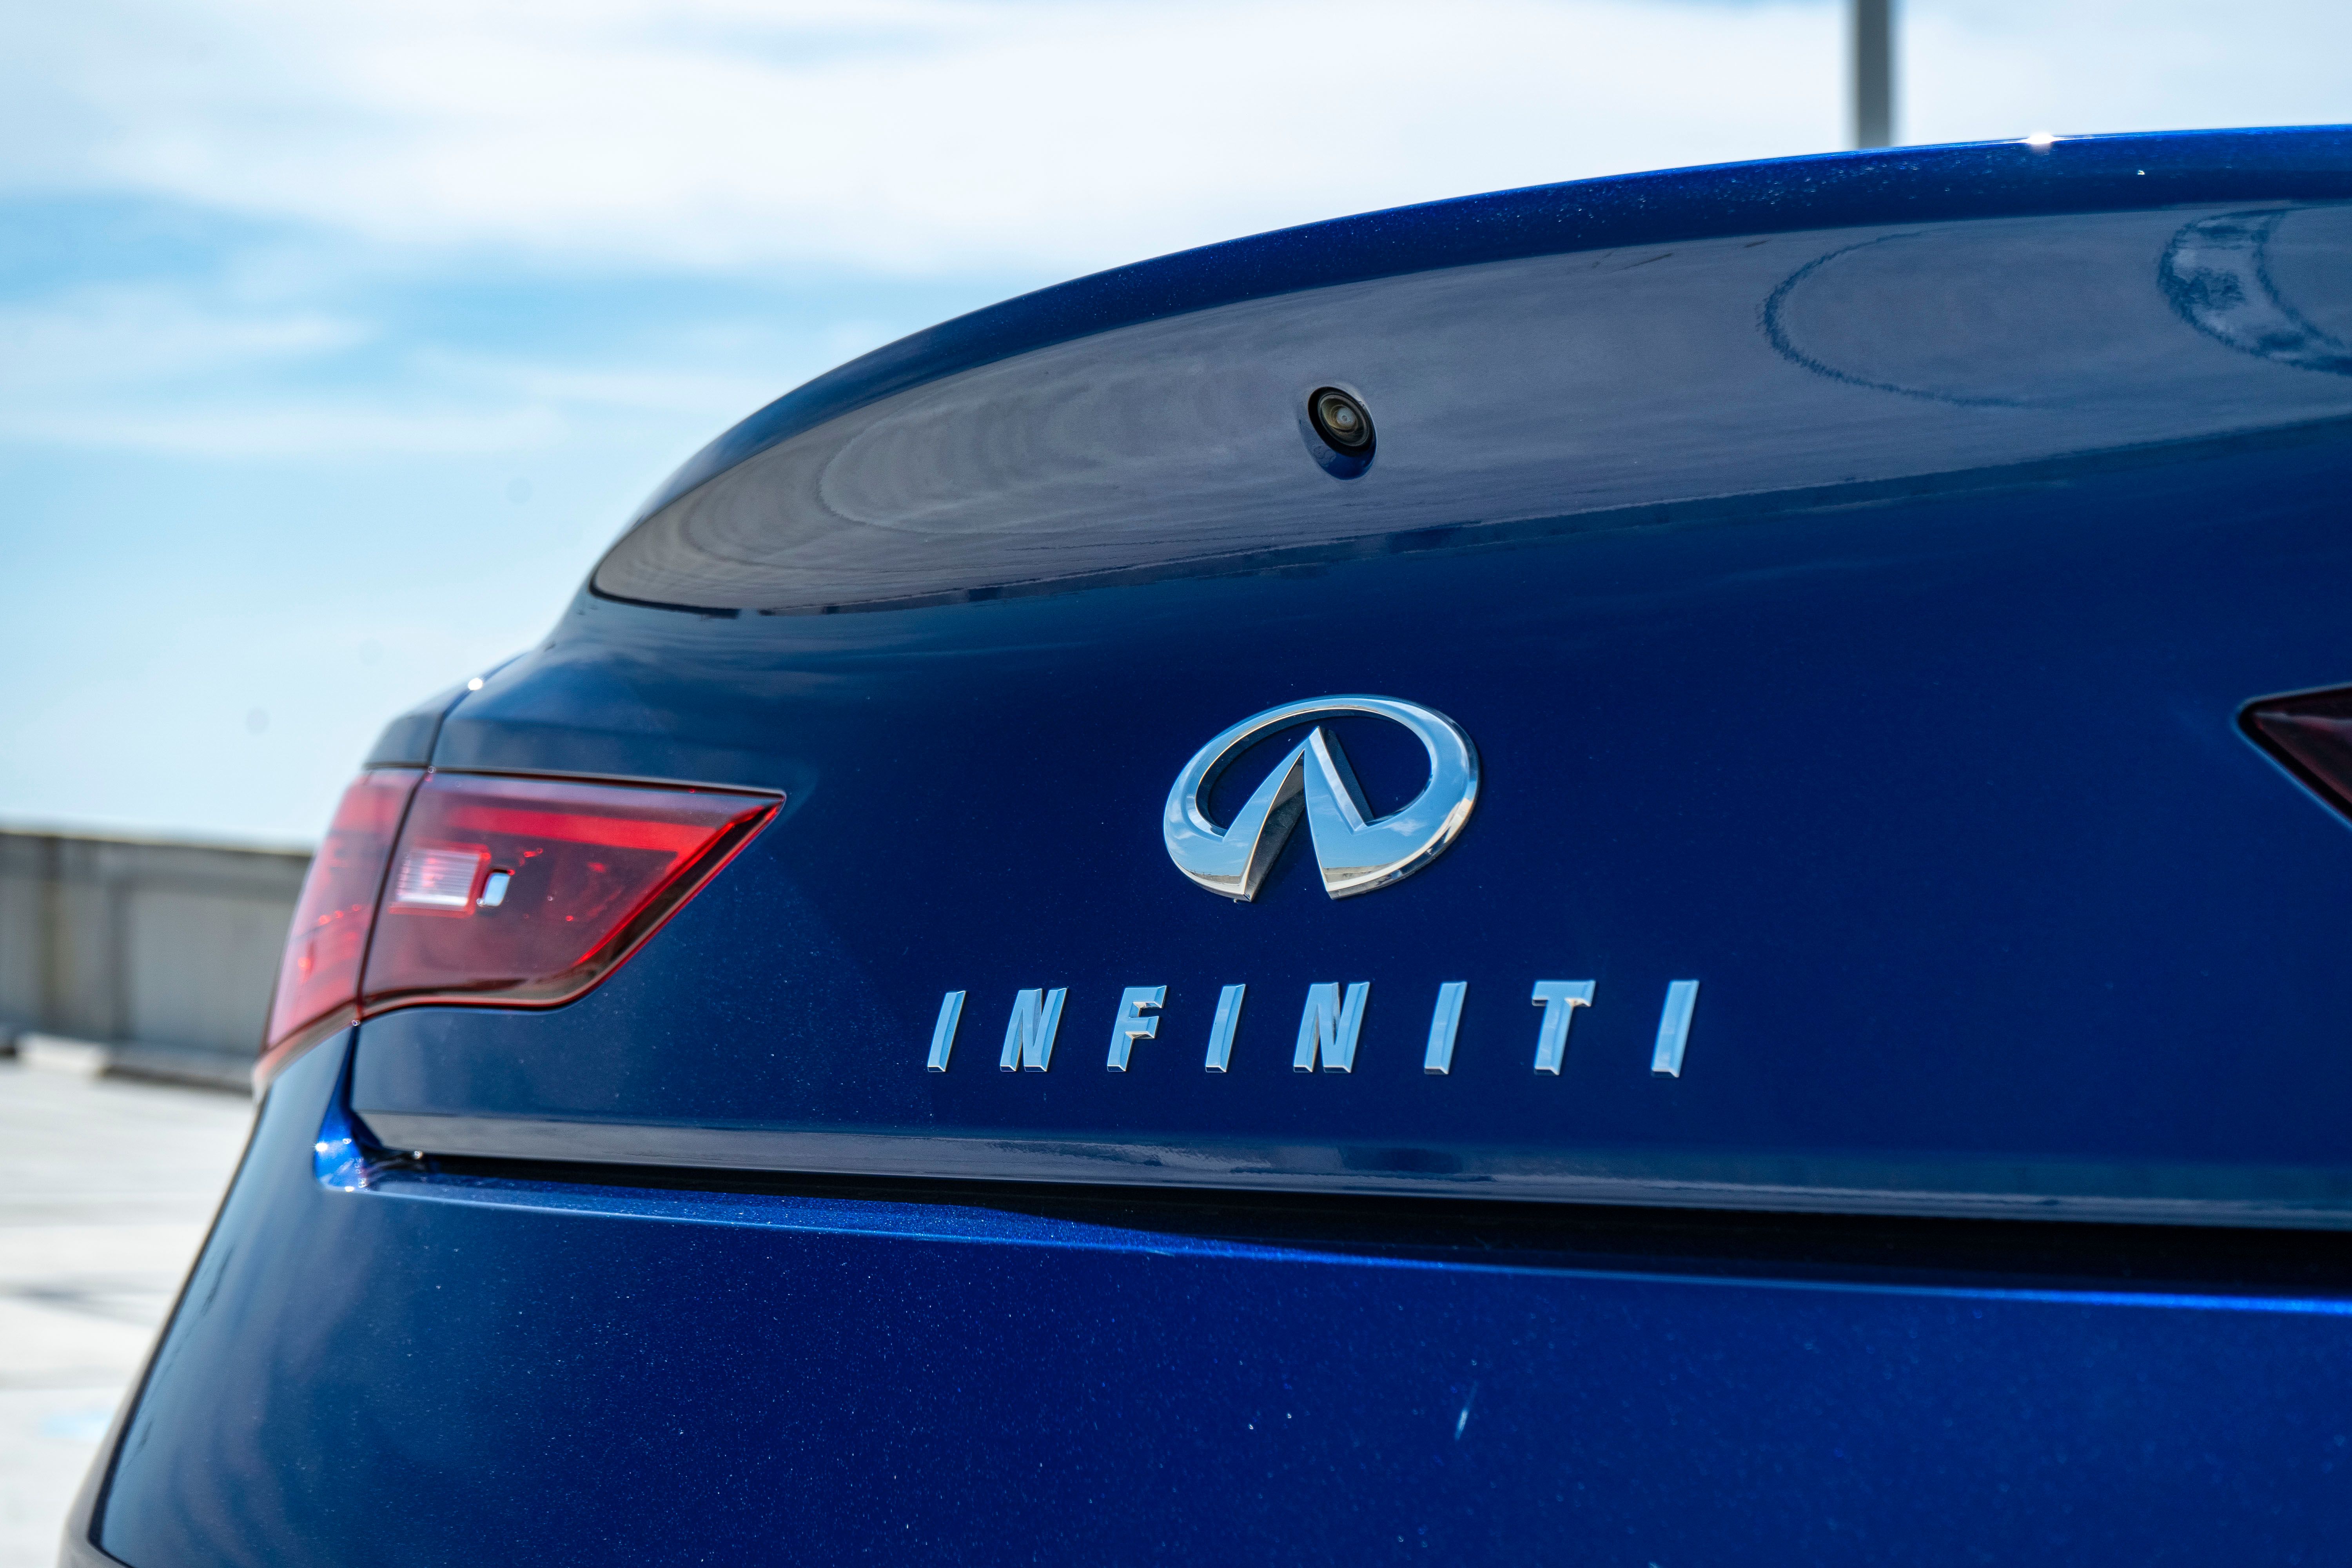 2020 Infiniti Q60 Redsport - Driven Review and Impressions